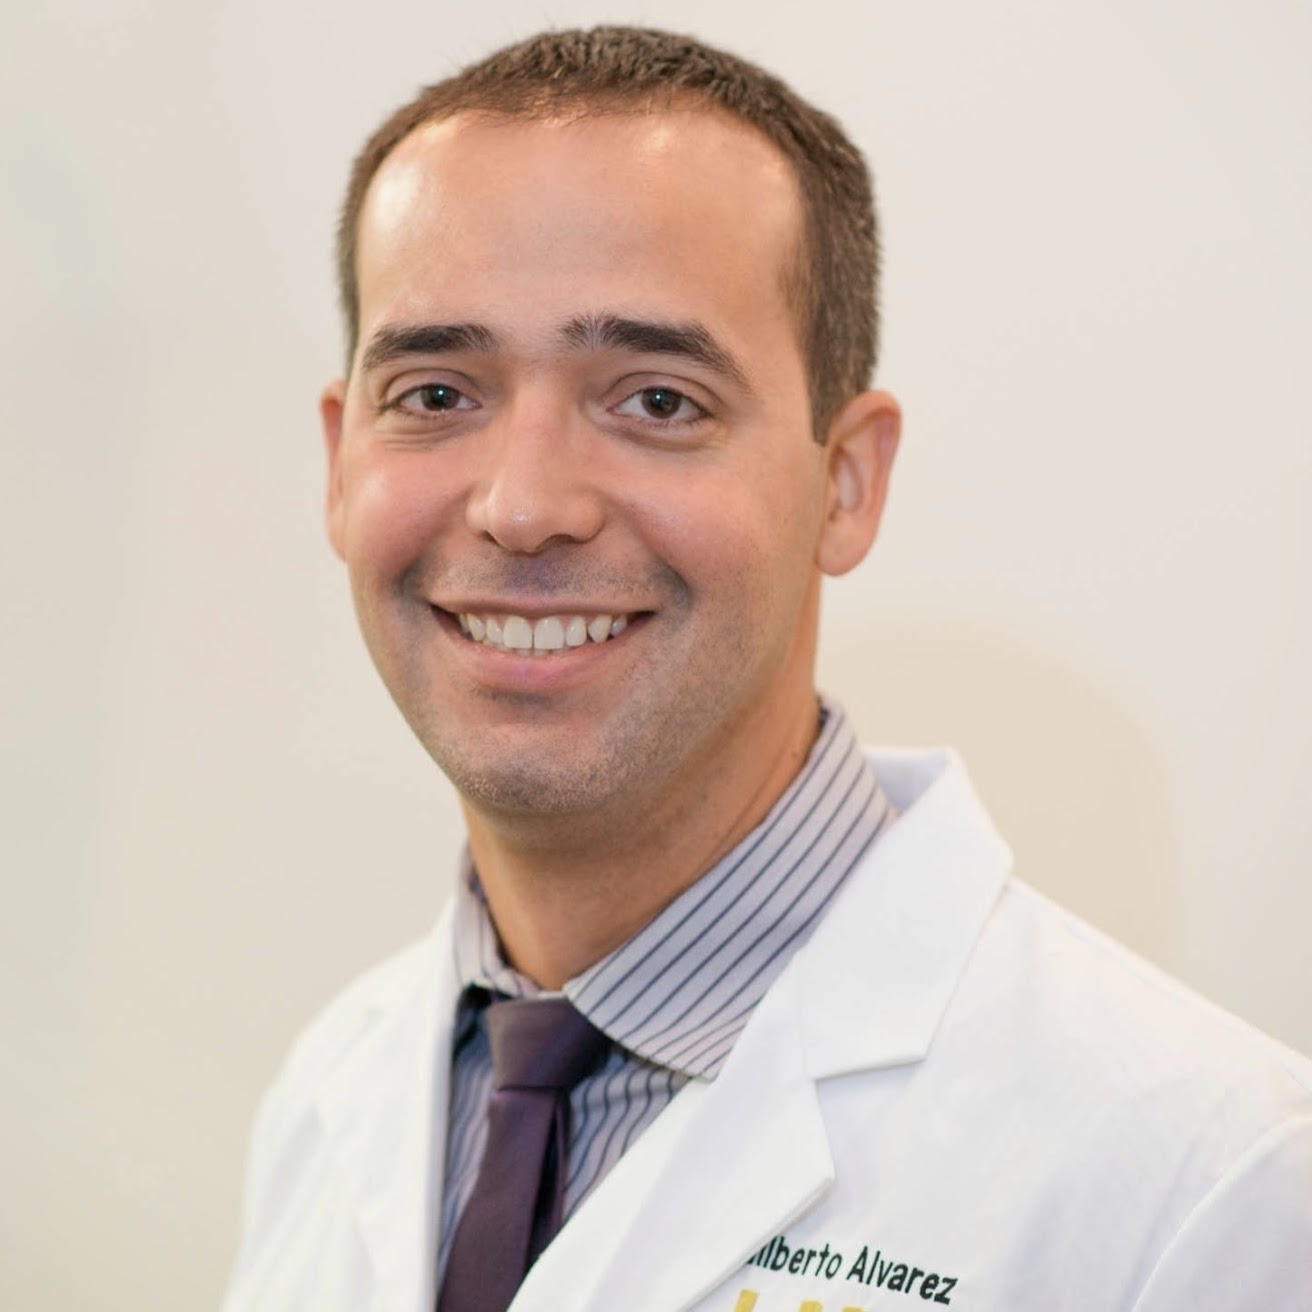 Photo of Dr. Gilberto Alvarez del Manzano in New York City, New York, United States - 1 Picture of Point of interest, Establishment, Health, Doctor